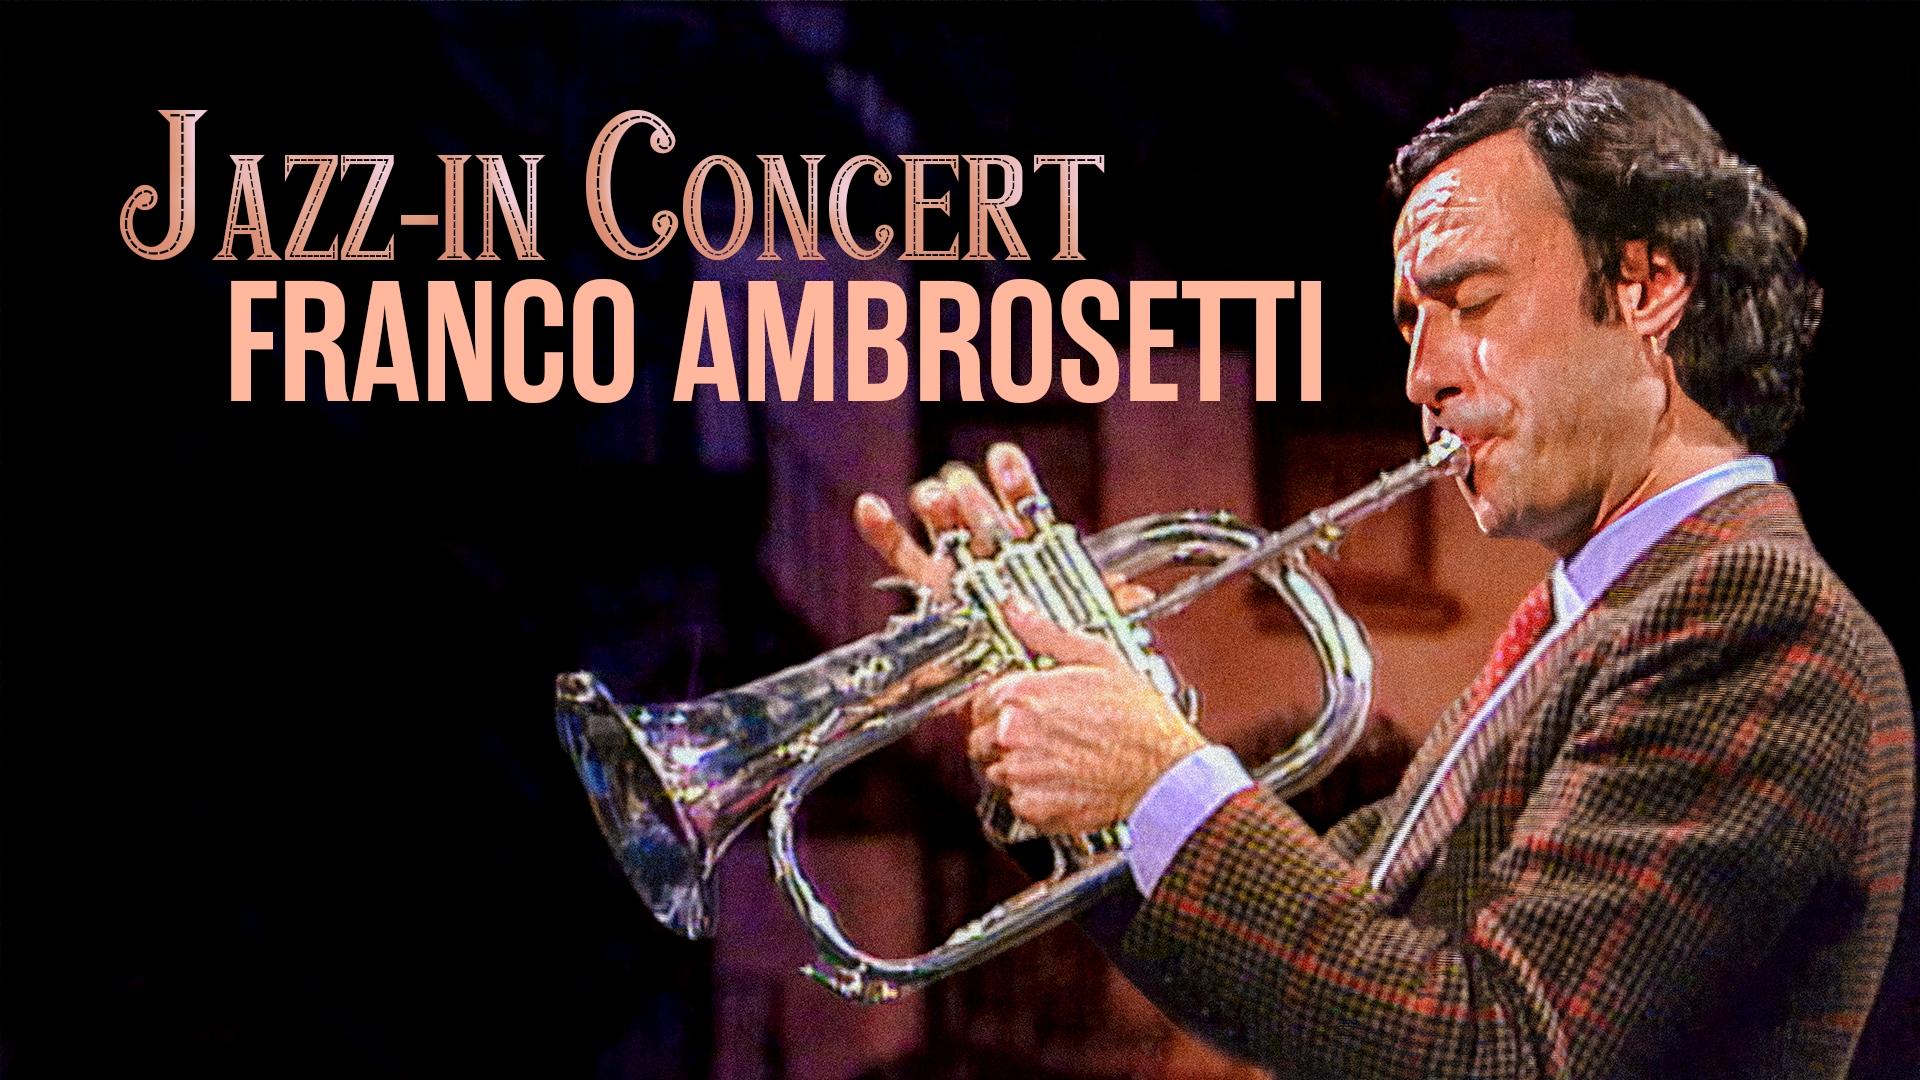 Jazz-In Concert: Franco Ambrosetti